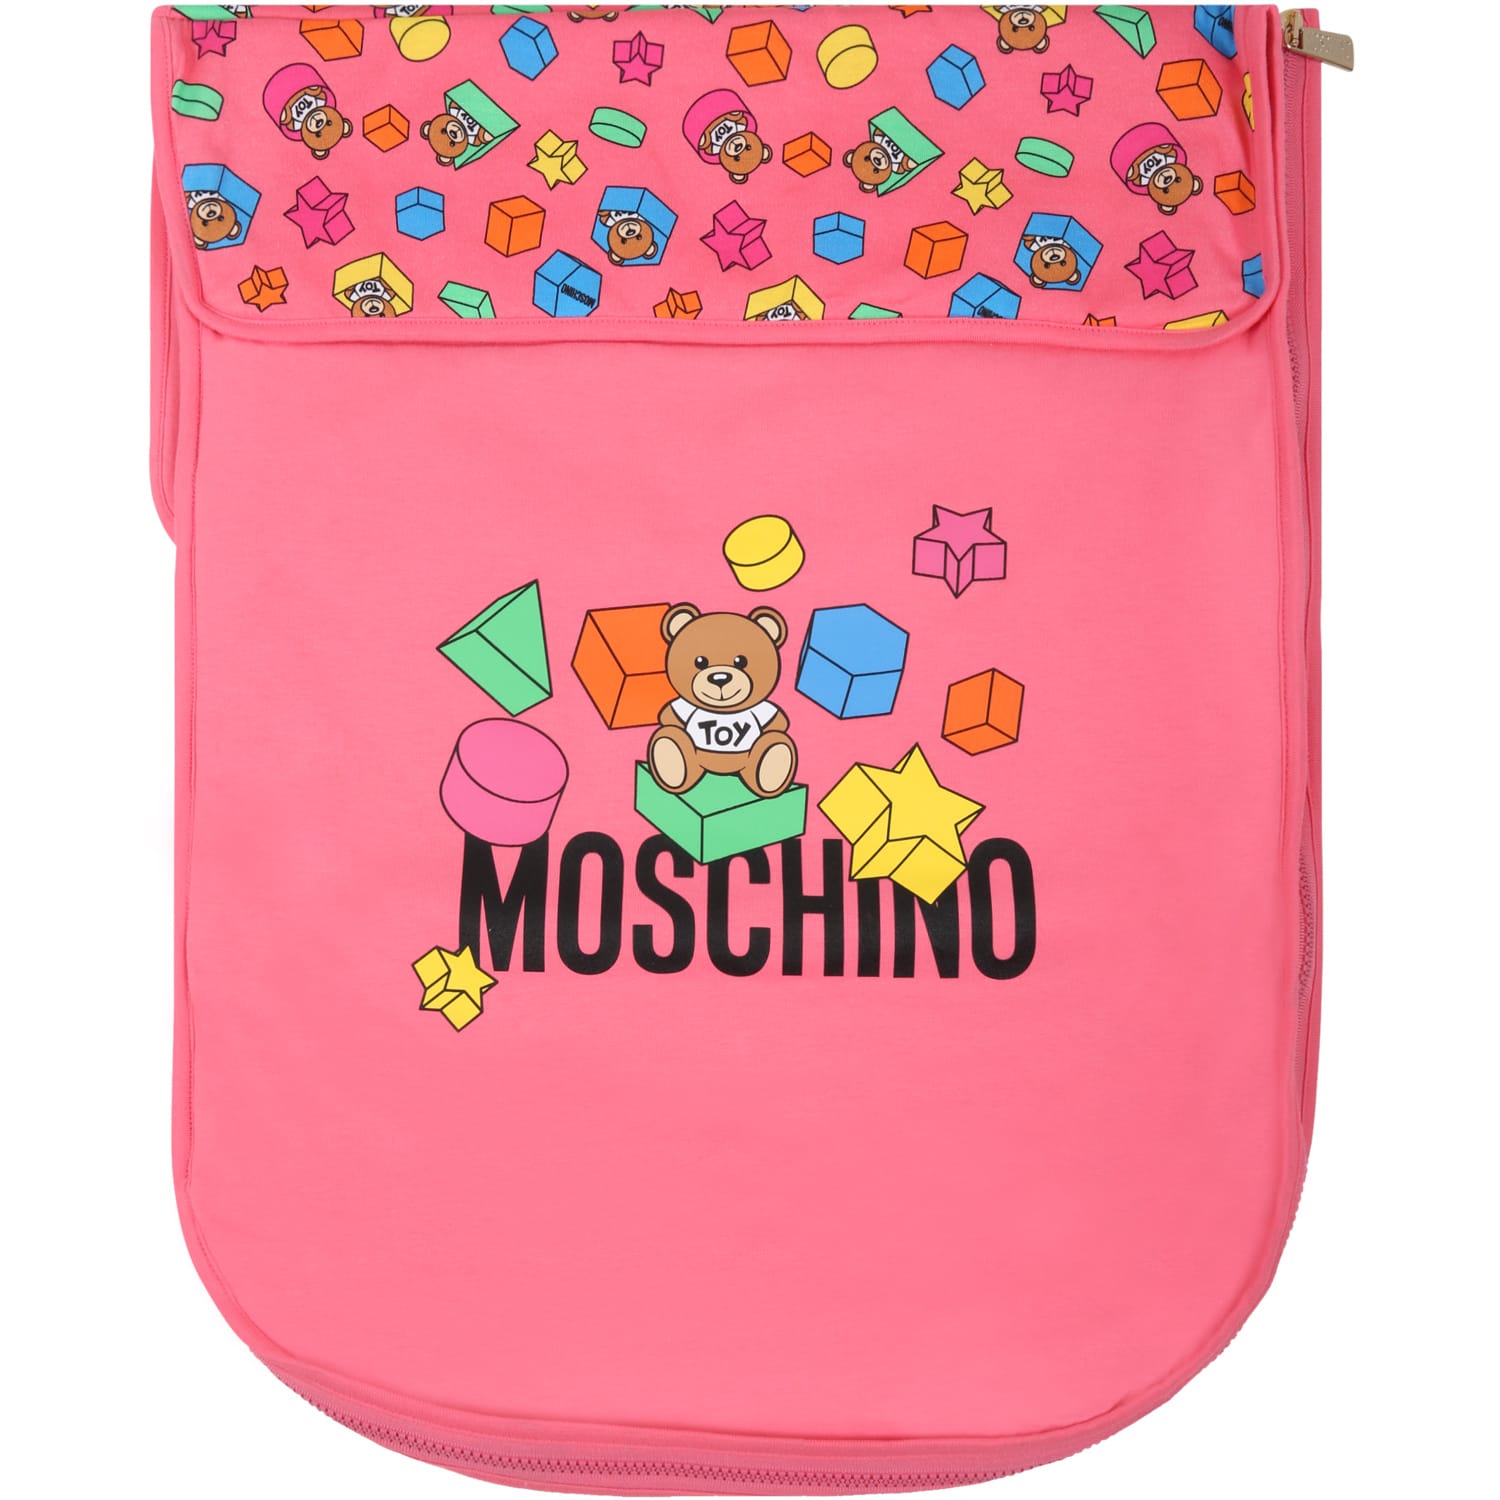 Moschino Fuchsia Sleeping Bag For Babygirl With Teddy Bear